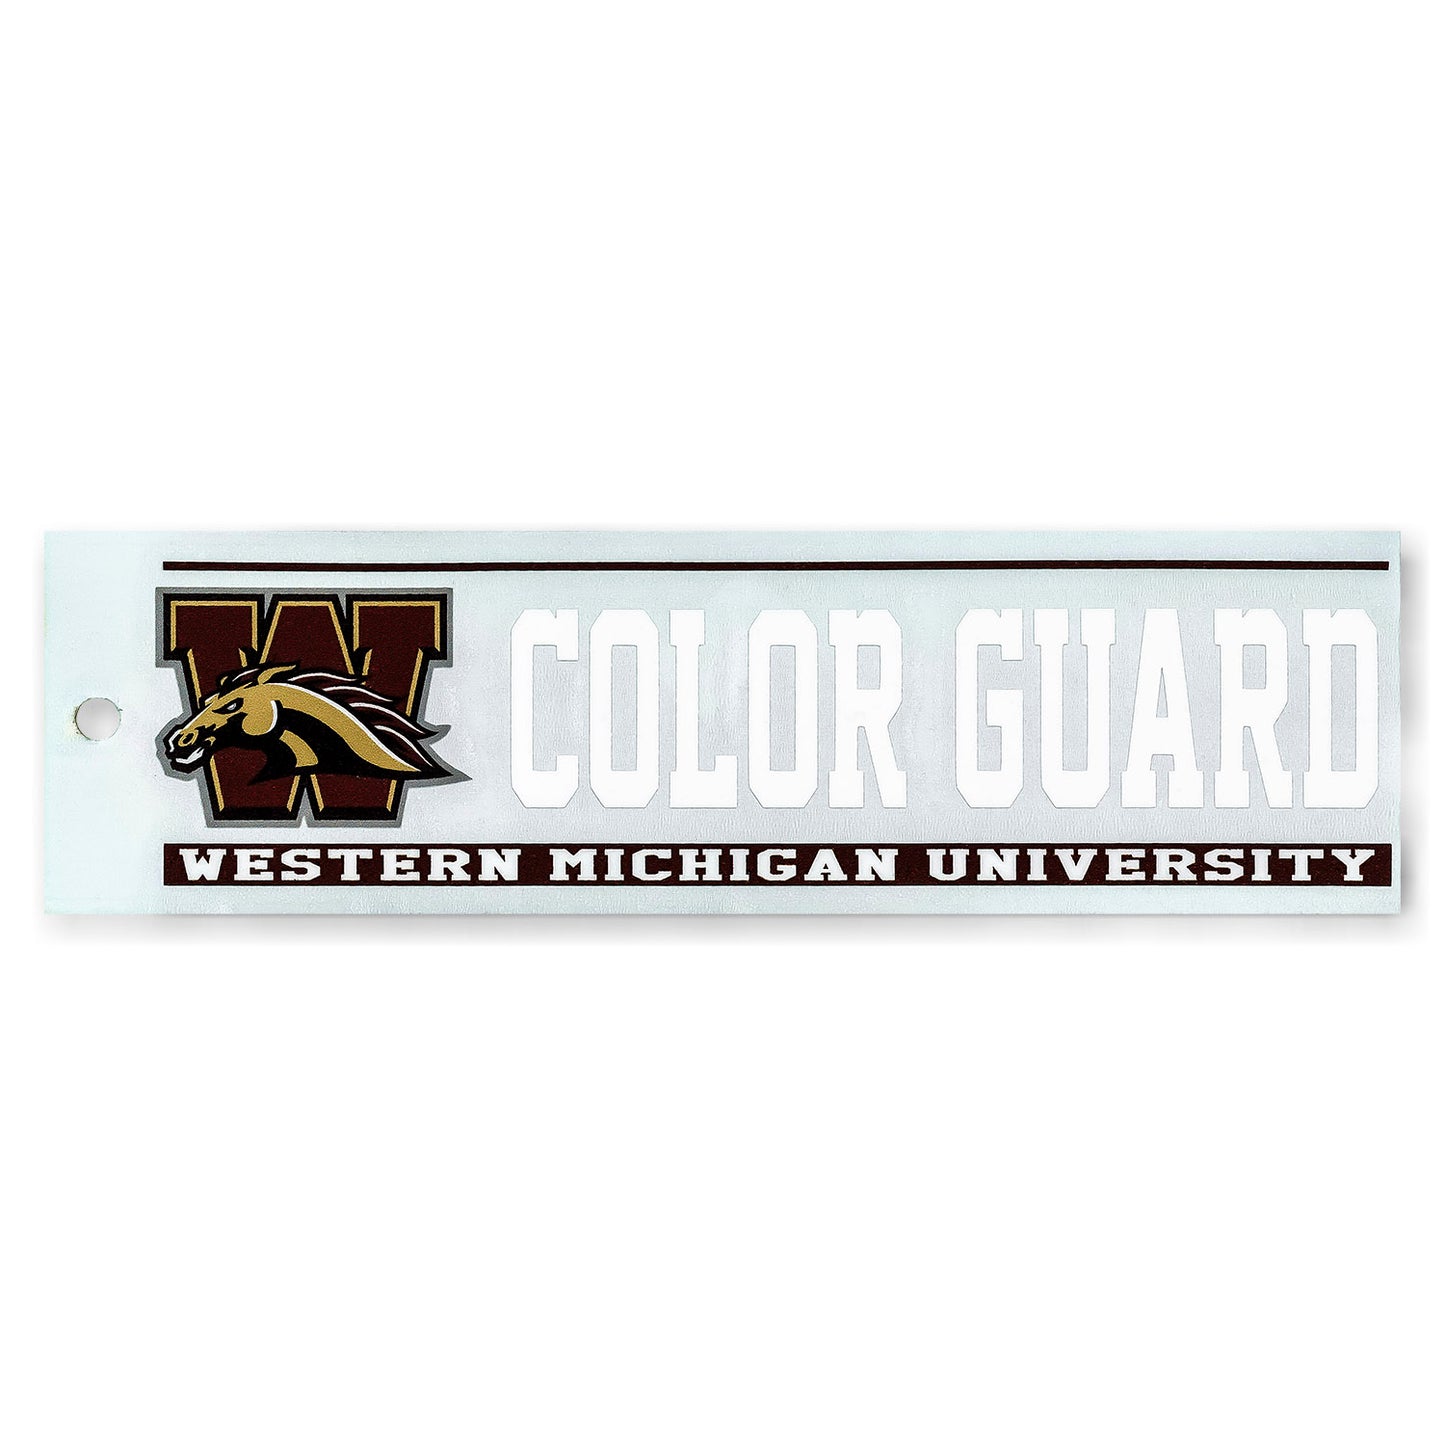 Western Michigan Color Guard Bar Decal